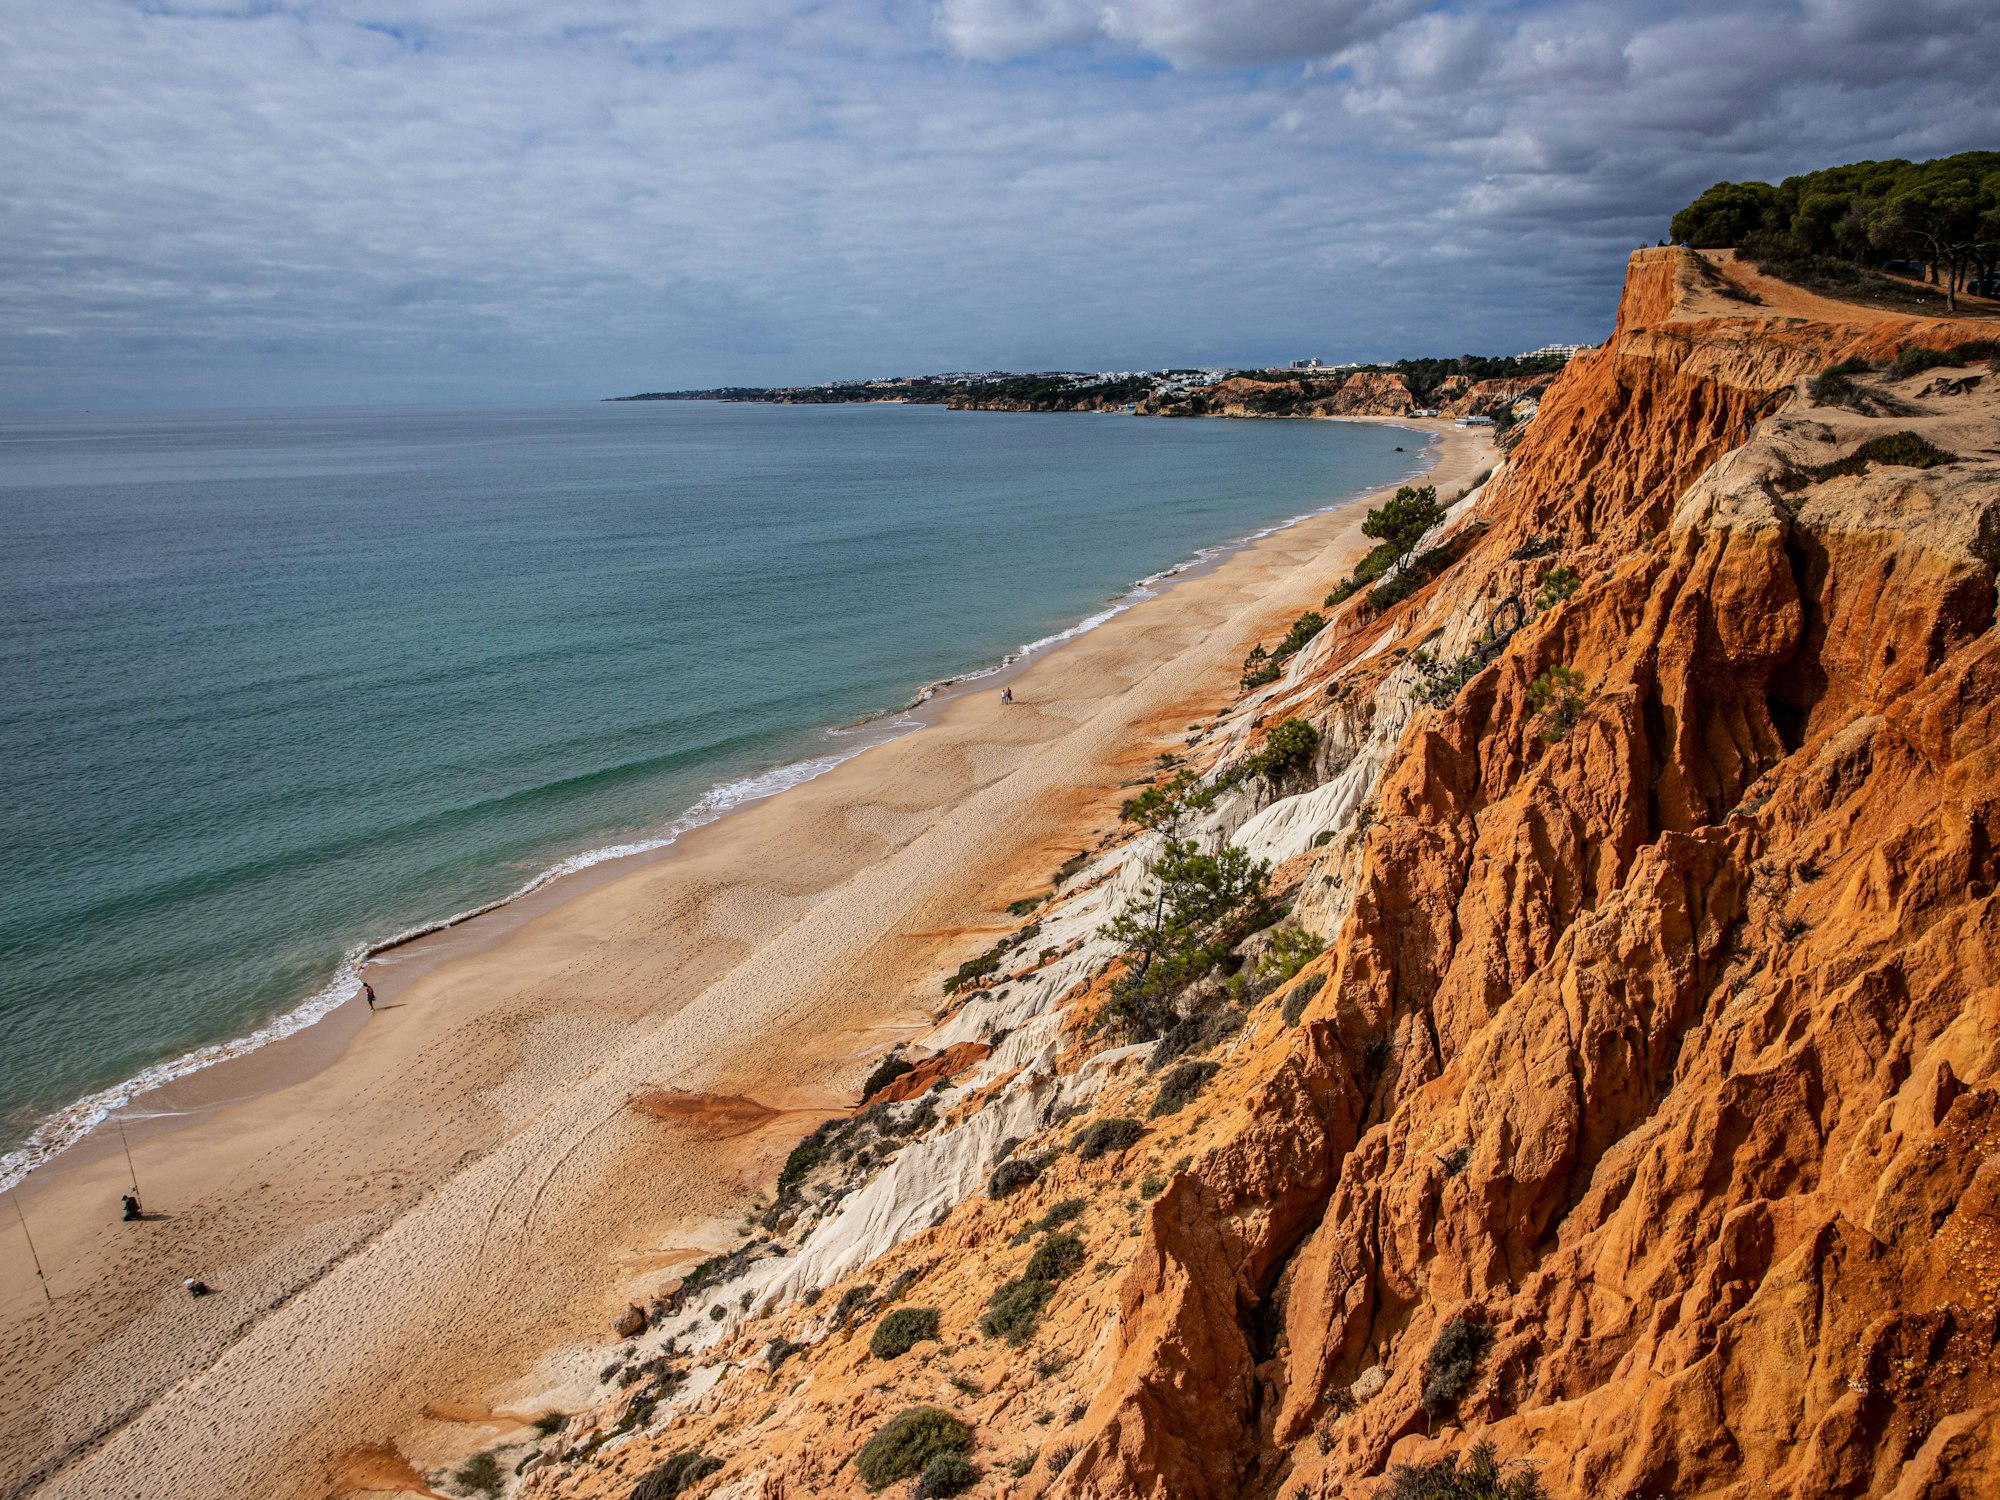 Blick auf die Praia da Falesia in Portugal, hier im November 2021.